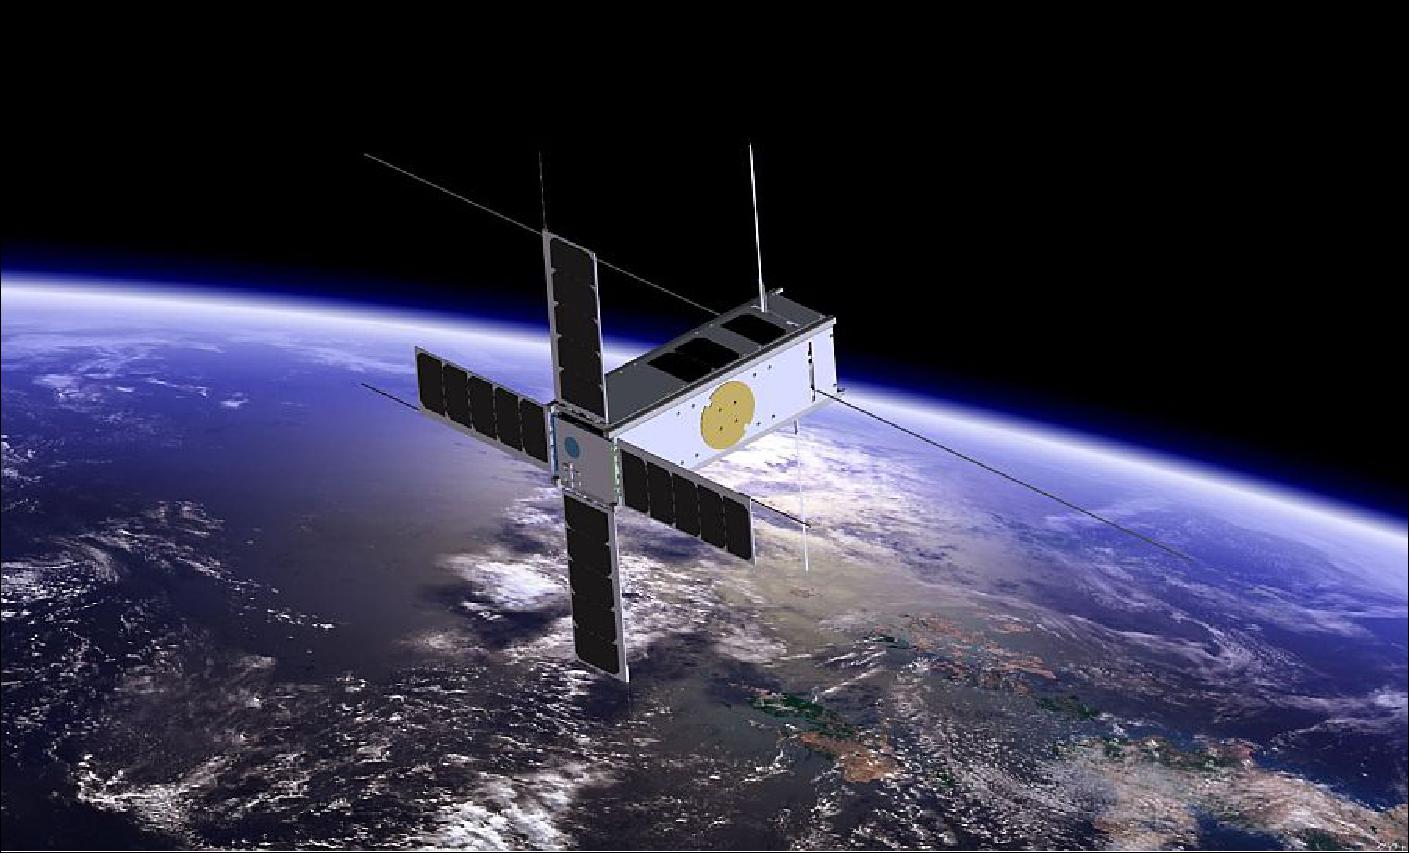 Figure 1: Artist's rendition of the deployed PICASSO nanosatellite (image credit: BIRA)